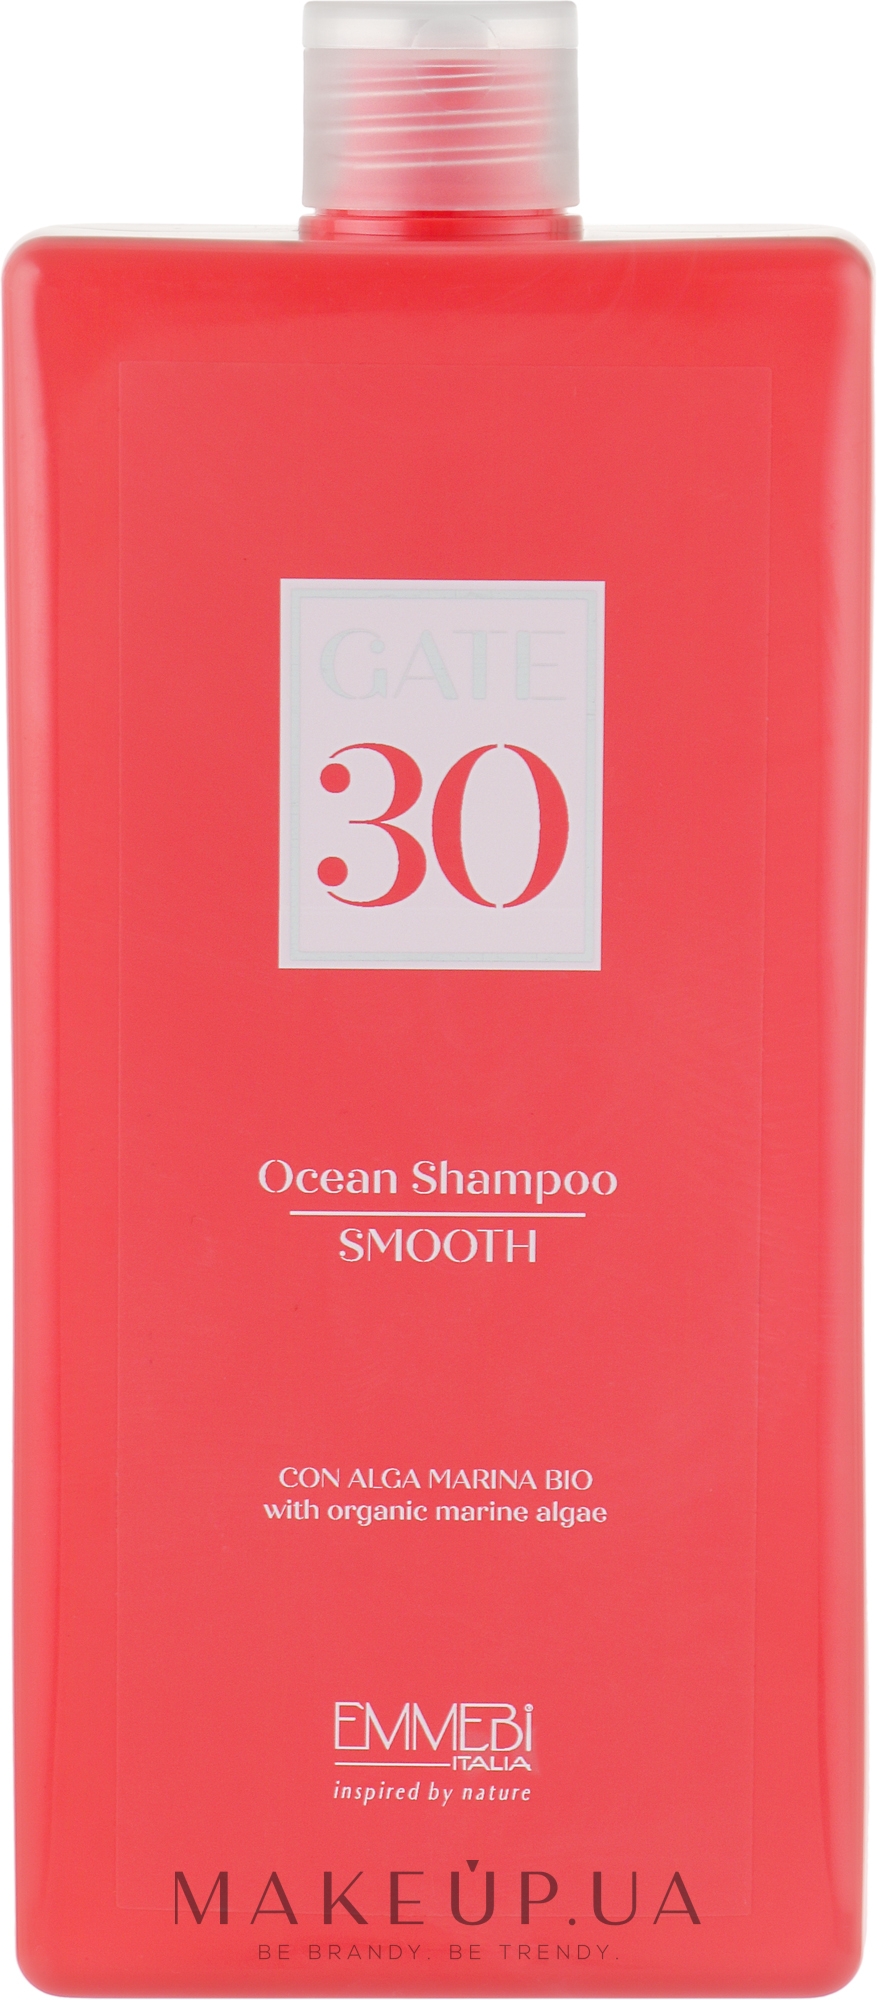 Выравнивающий шампунь для волос - Emmebi Italia Gate 30 Wash Ocean Shampoo Smooth — фото 1000ml